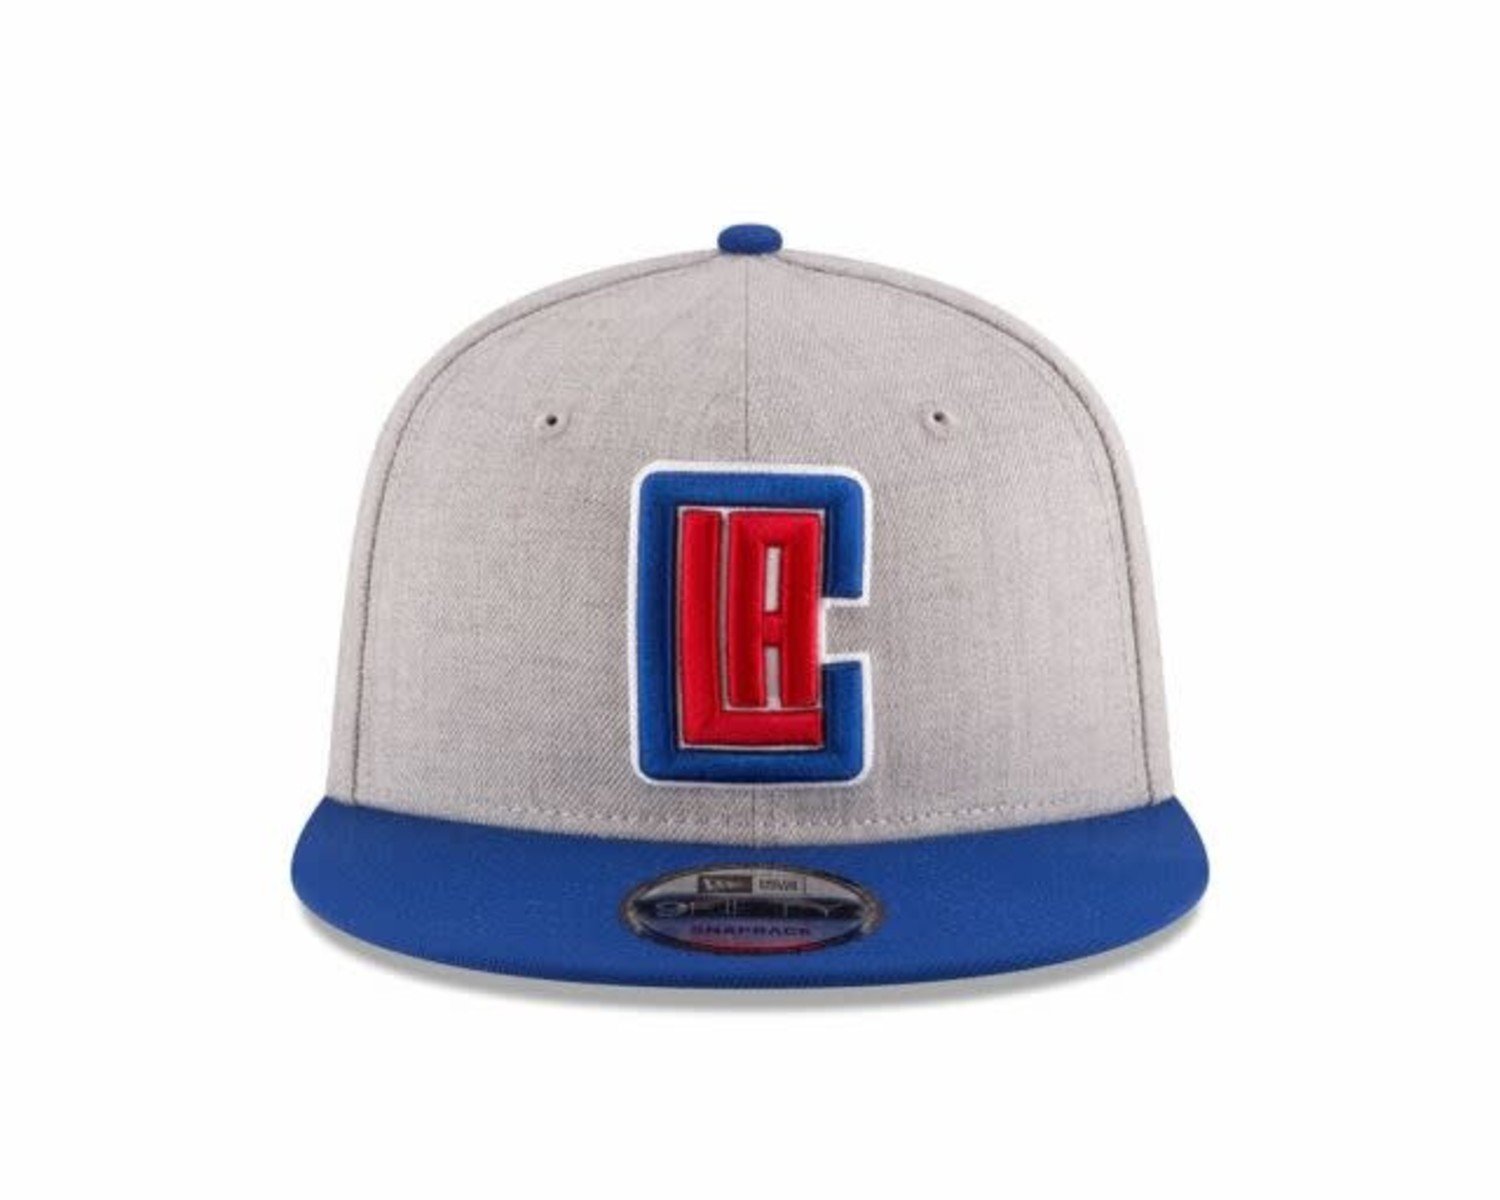 Clippers New Era 9FIFTY Back Half Snapback Hat